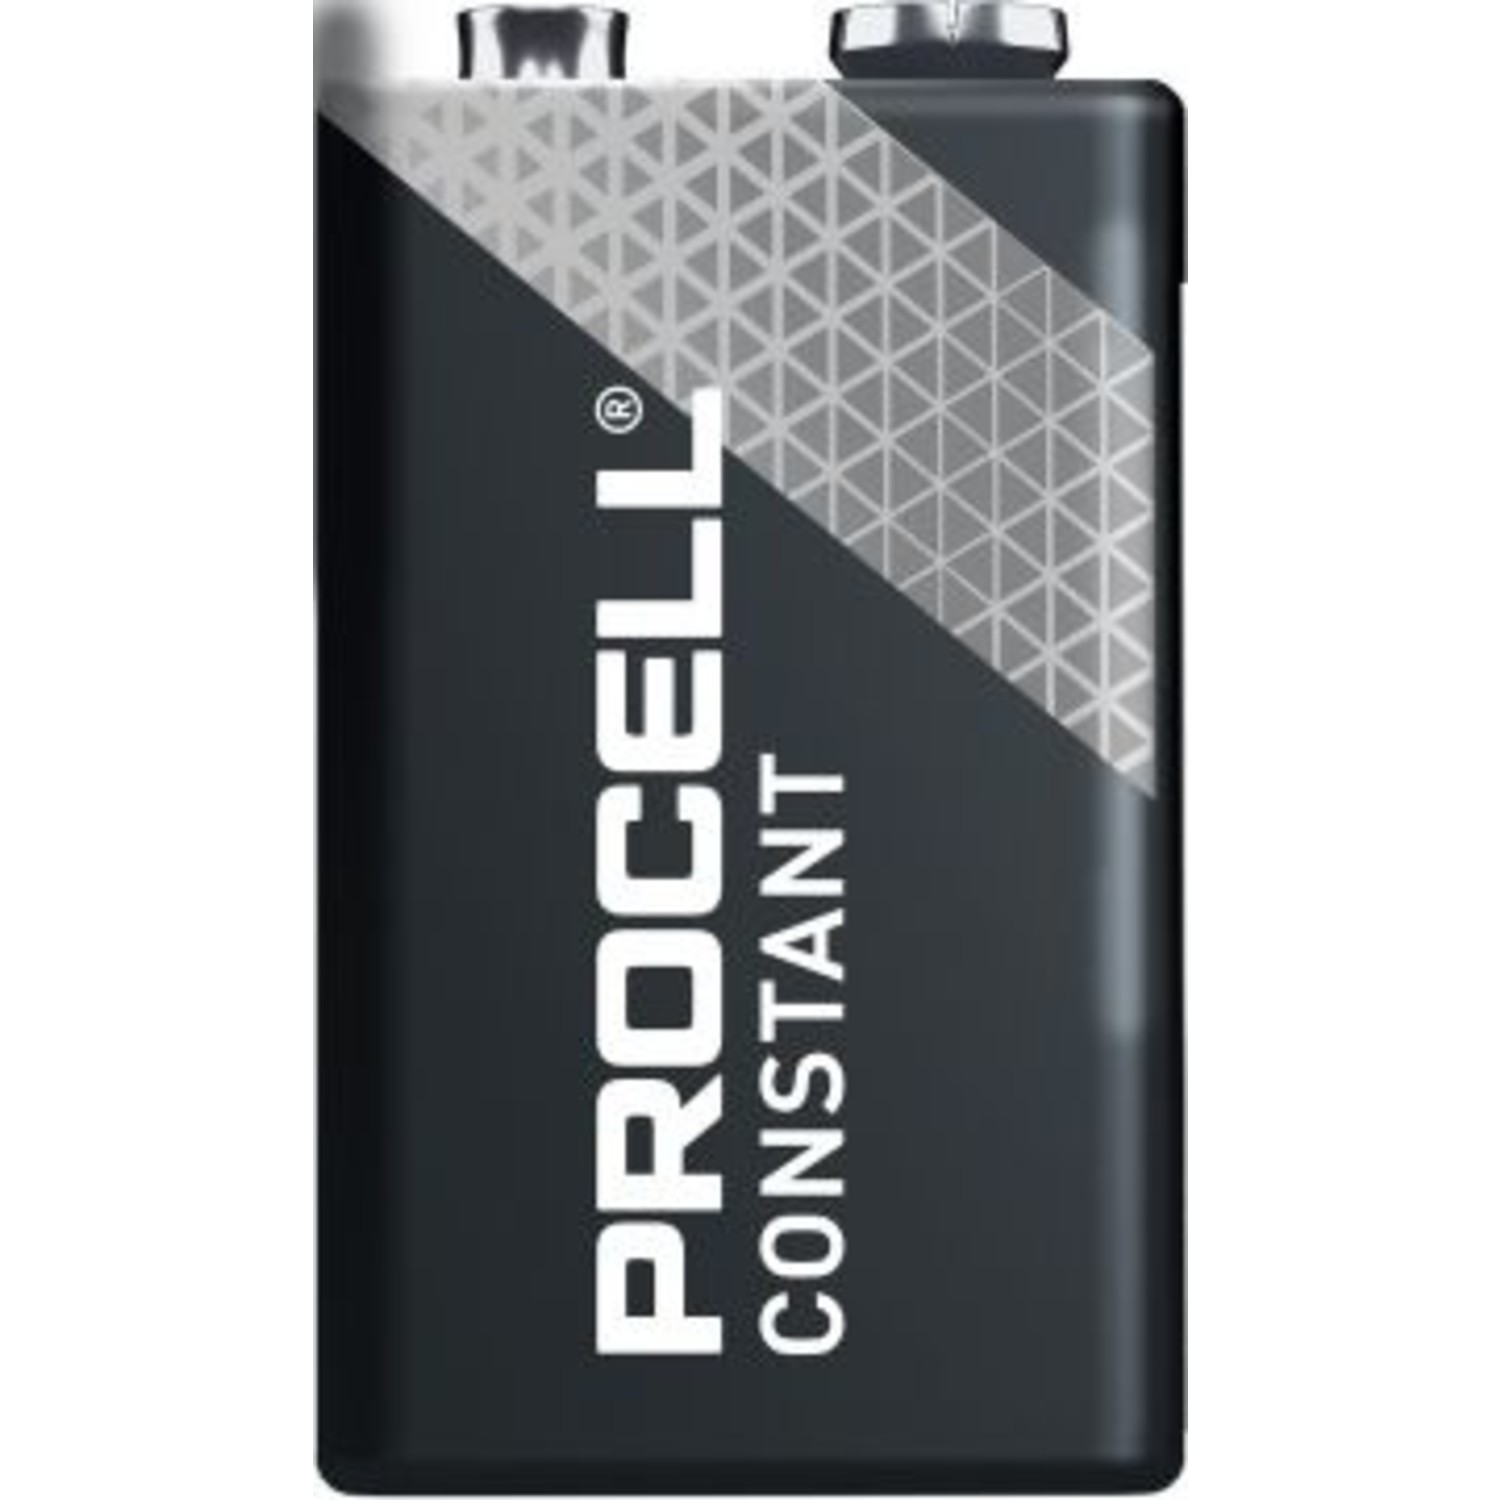 Duracell Procell Constant Pile Alcaline 9V e-block 6LR61 